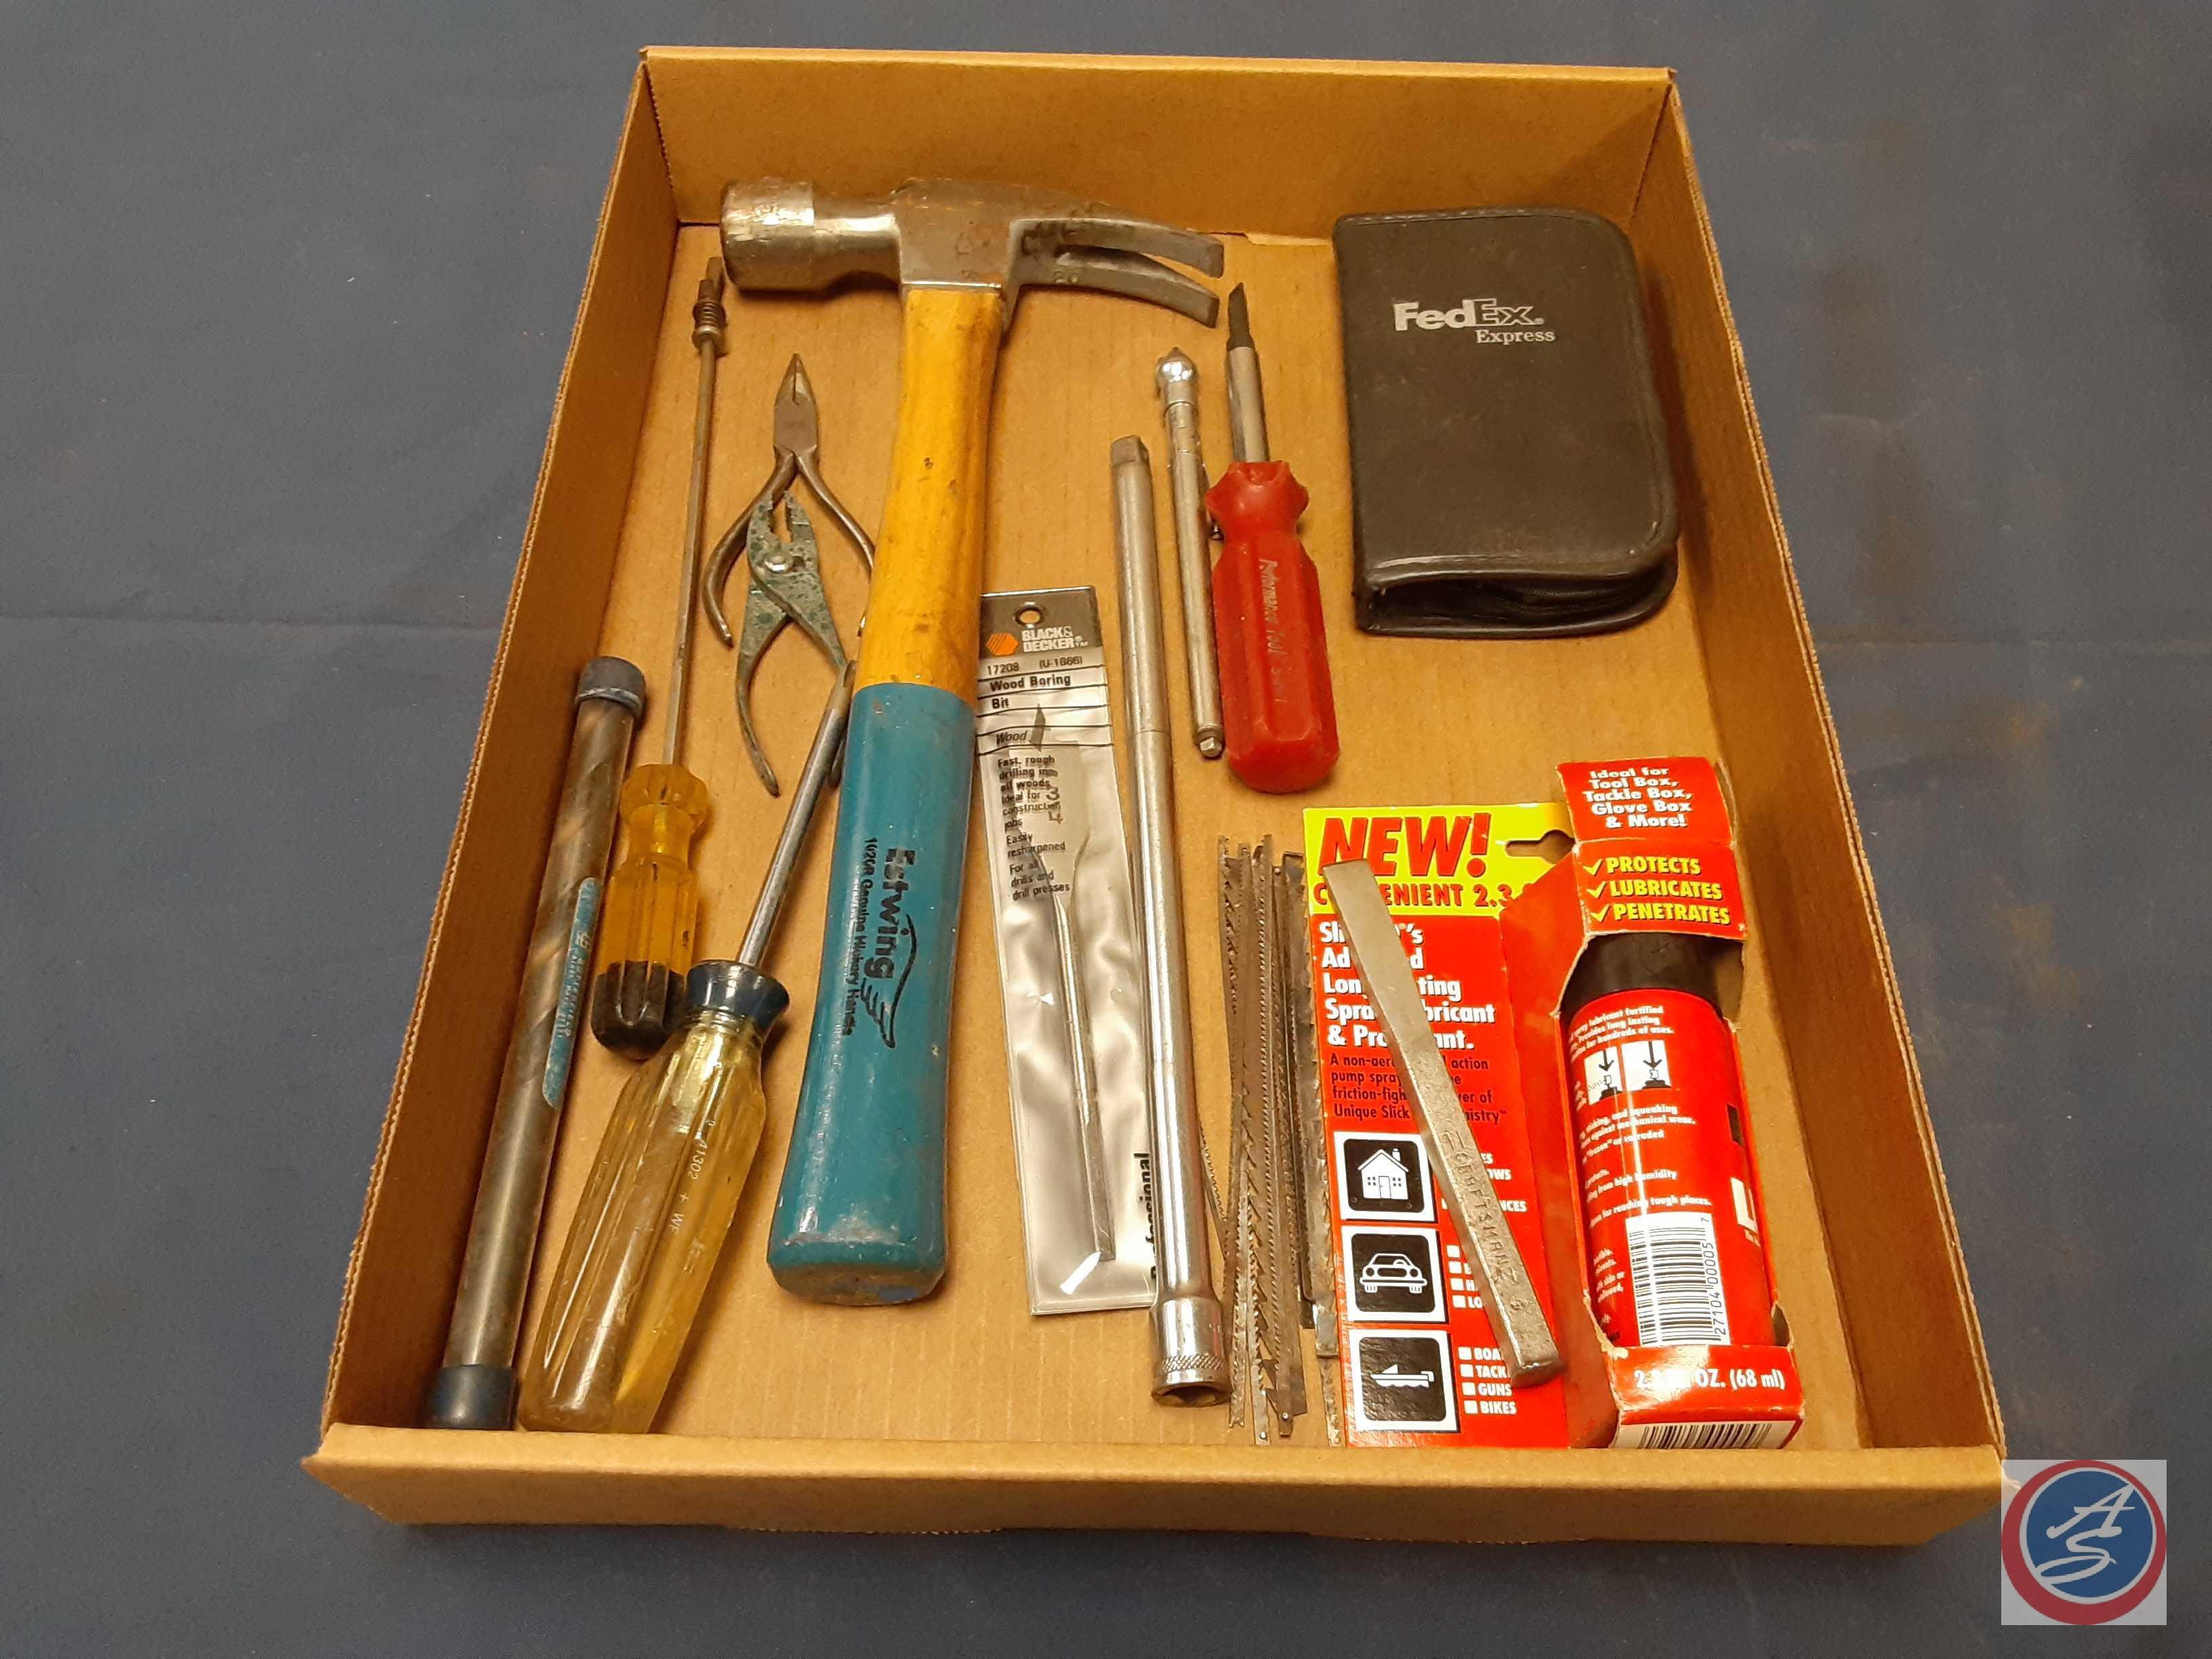 Hammer, Screwdrivers, Pliers, Drill Bits, Jig Saw Blades, Craftsman Assortment of Tools in Metal